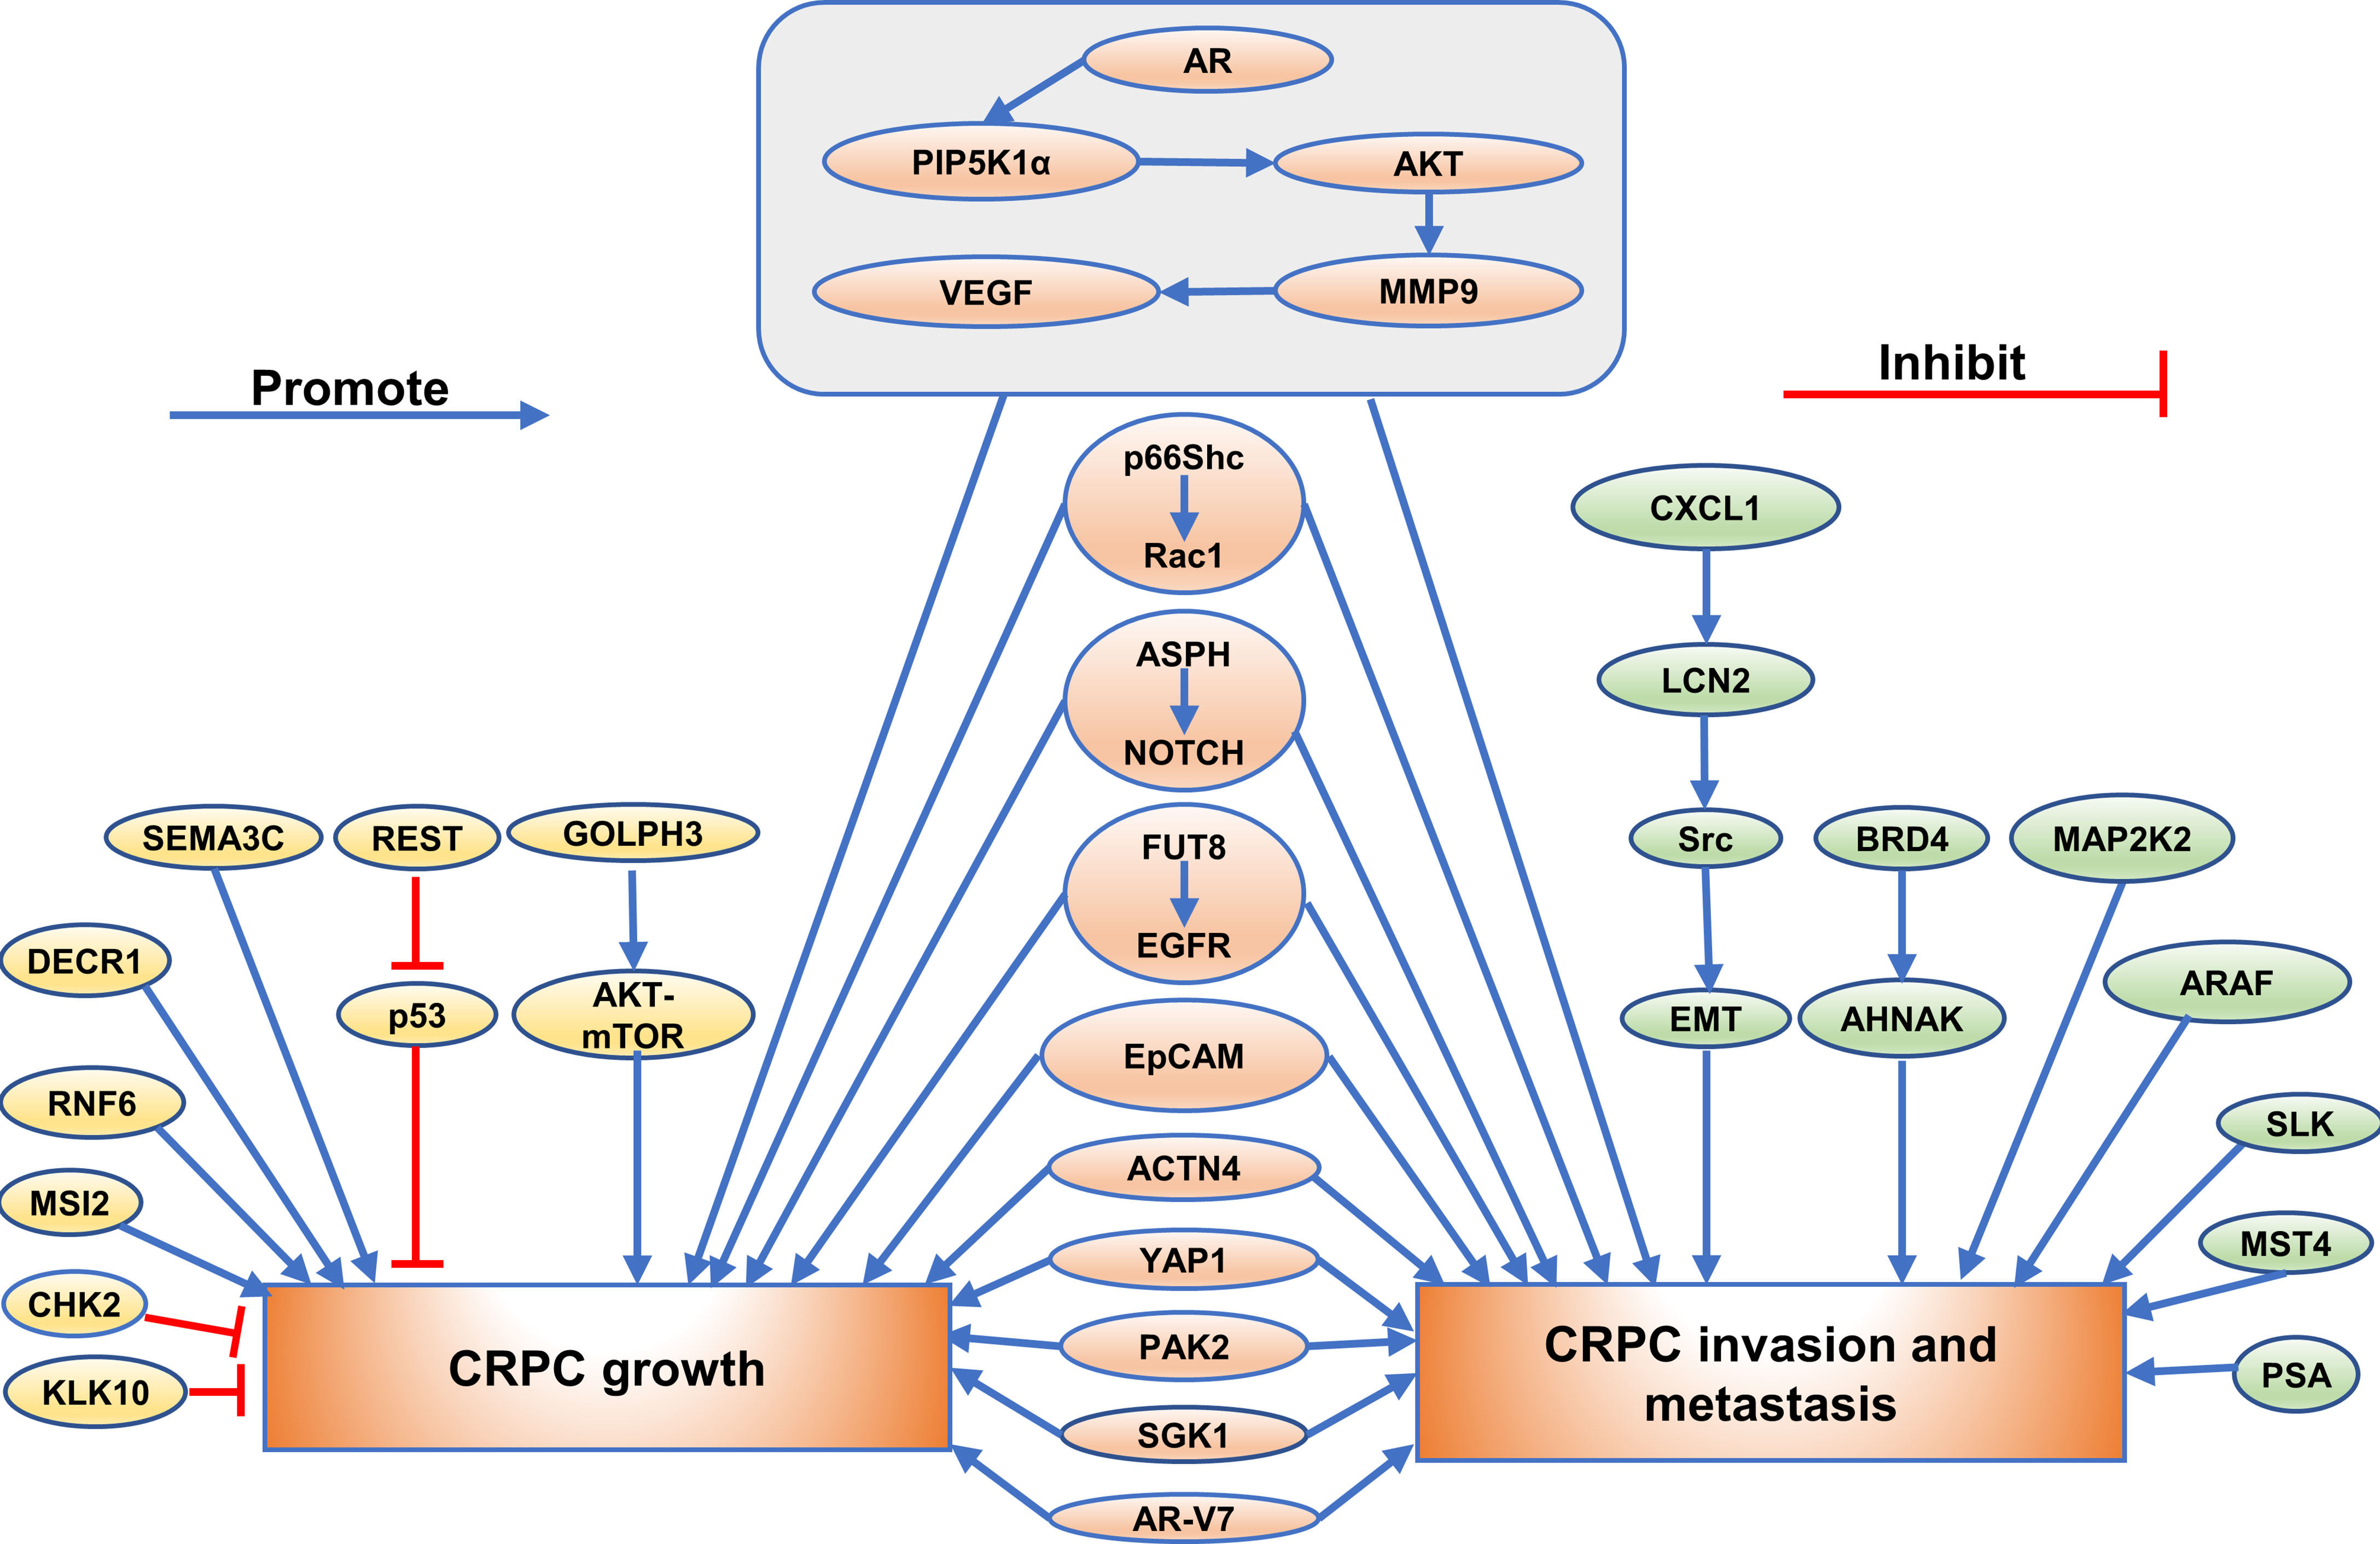 PDF) ACTN4 gene amplification is a predictive biomarker for